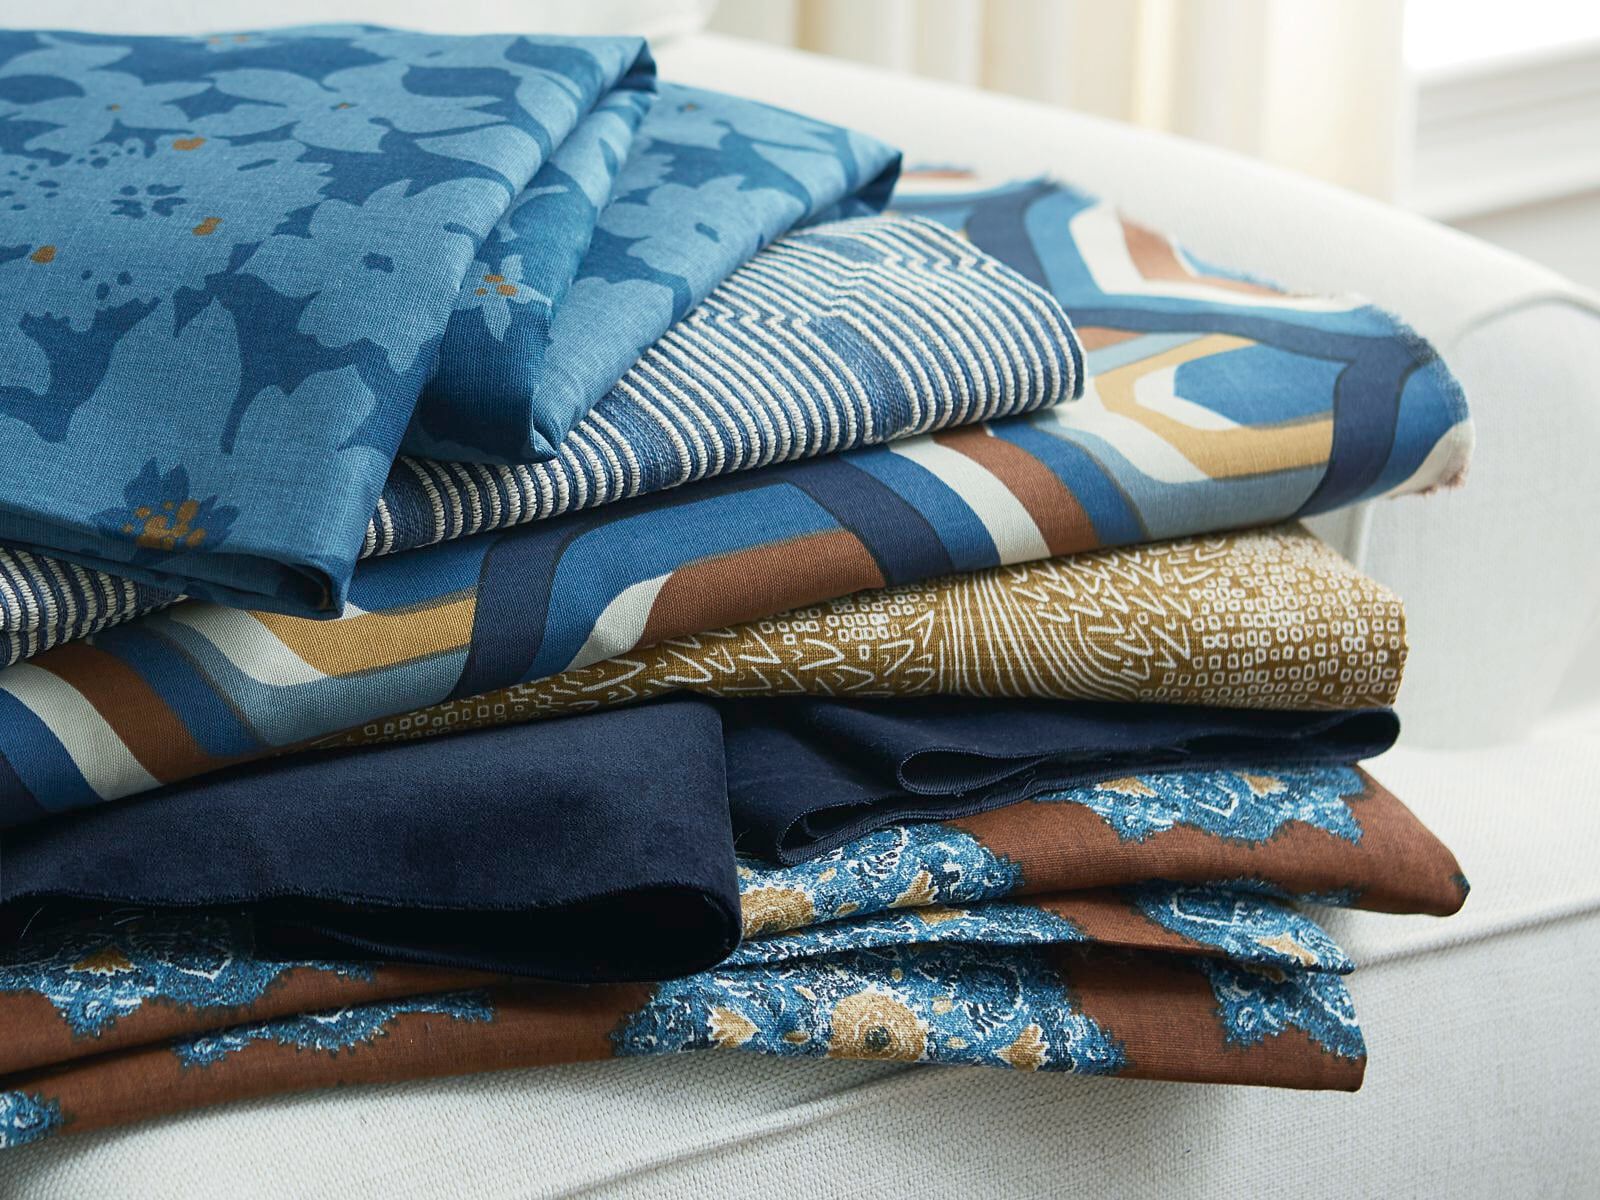 a stack of folded fabrics